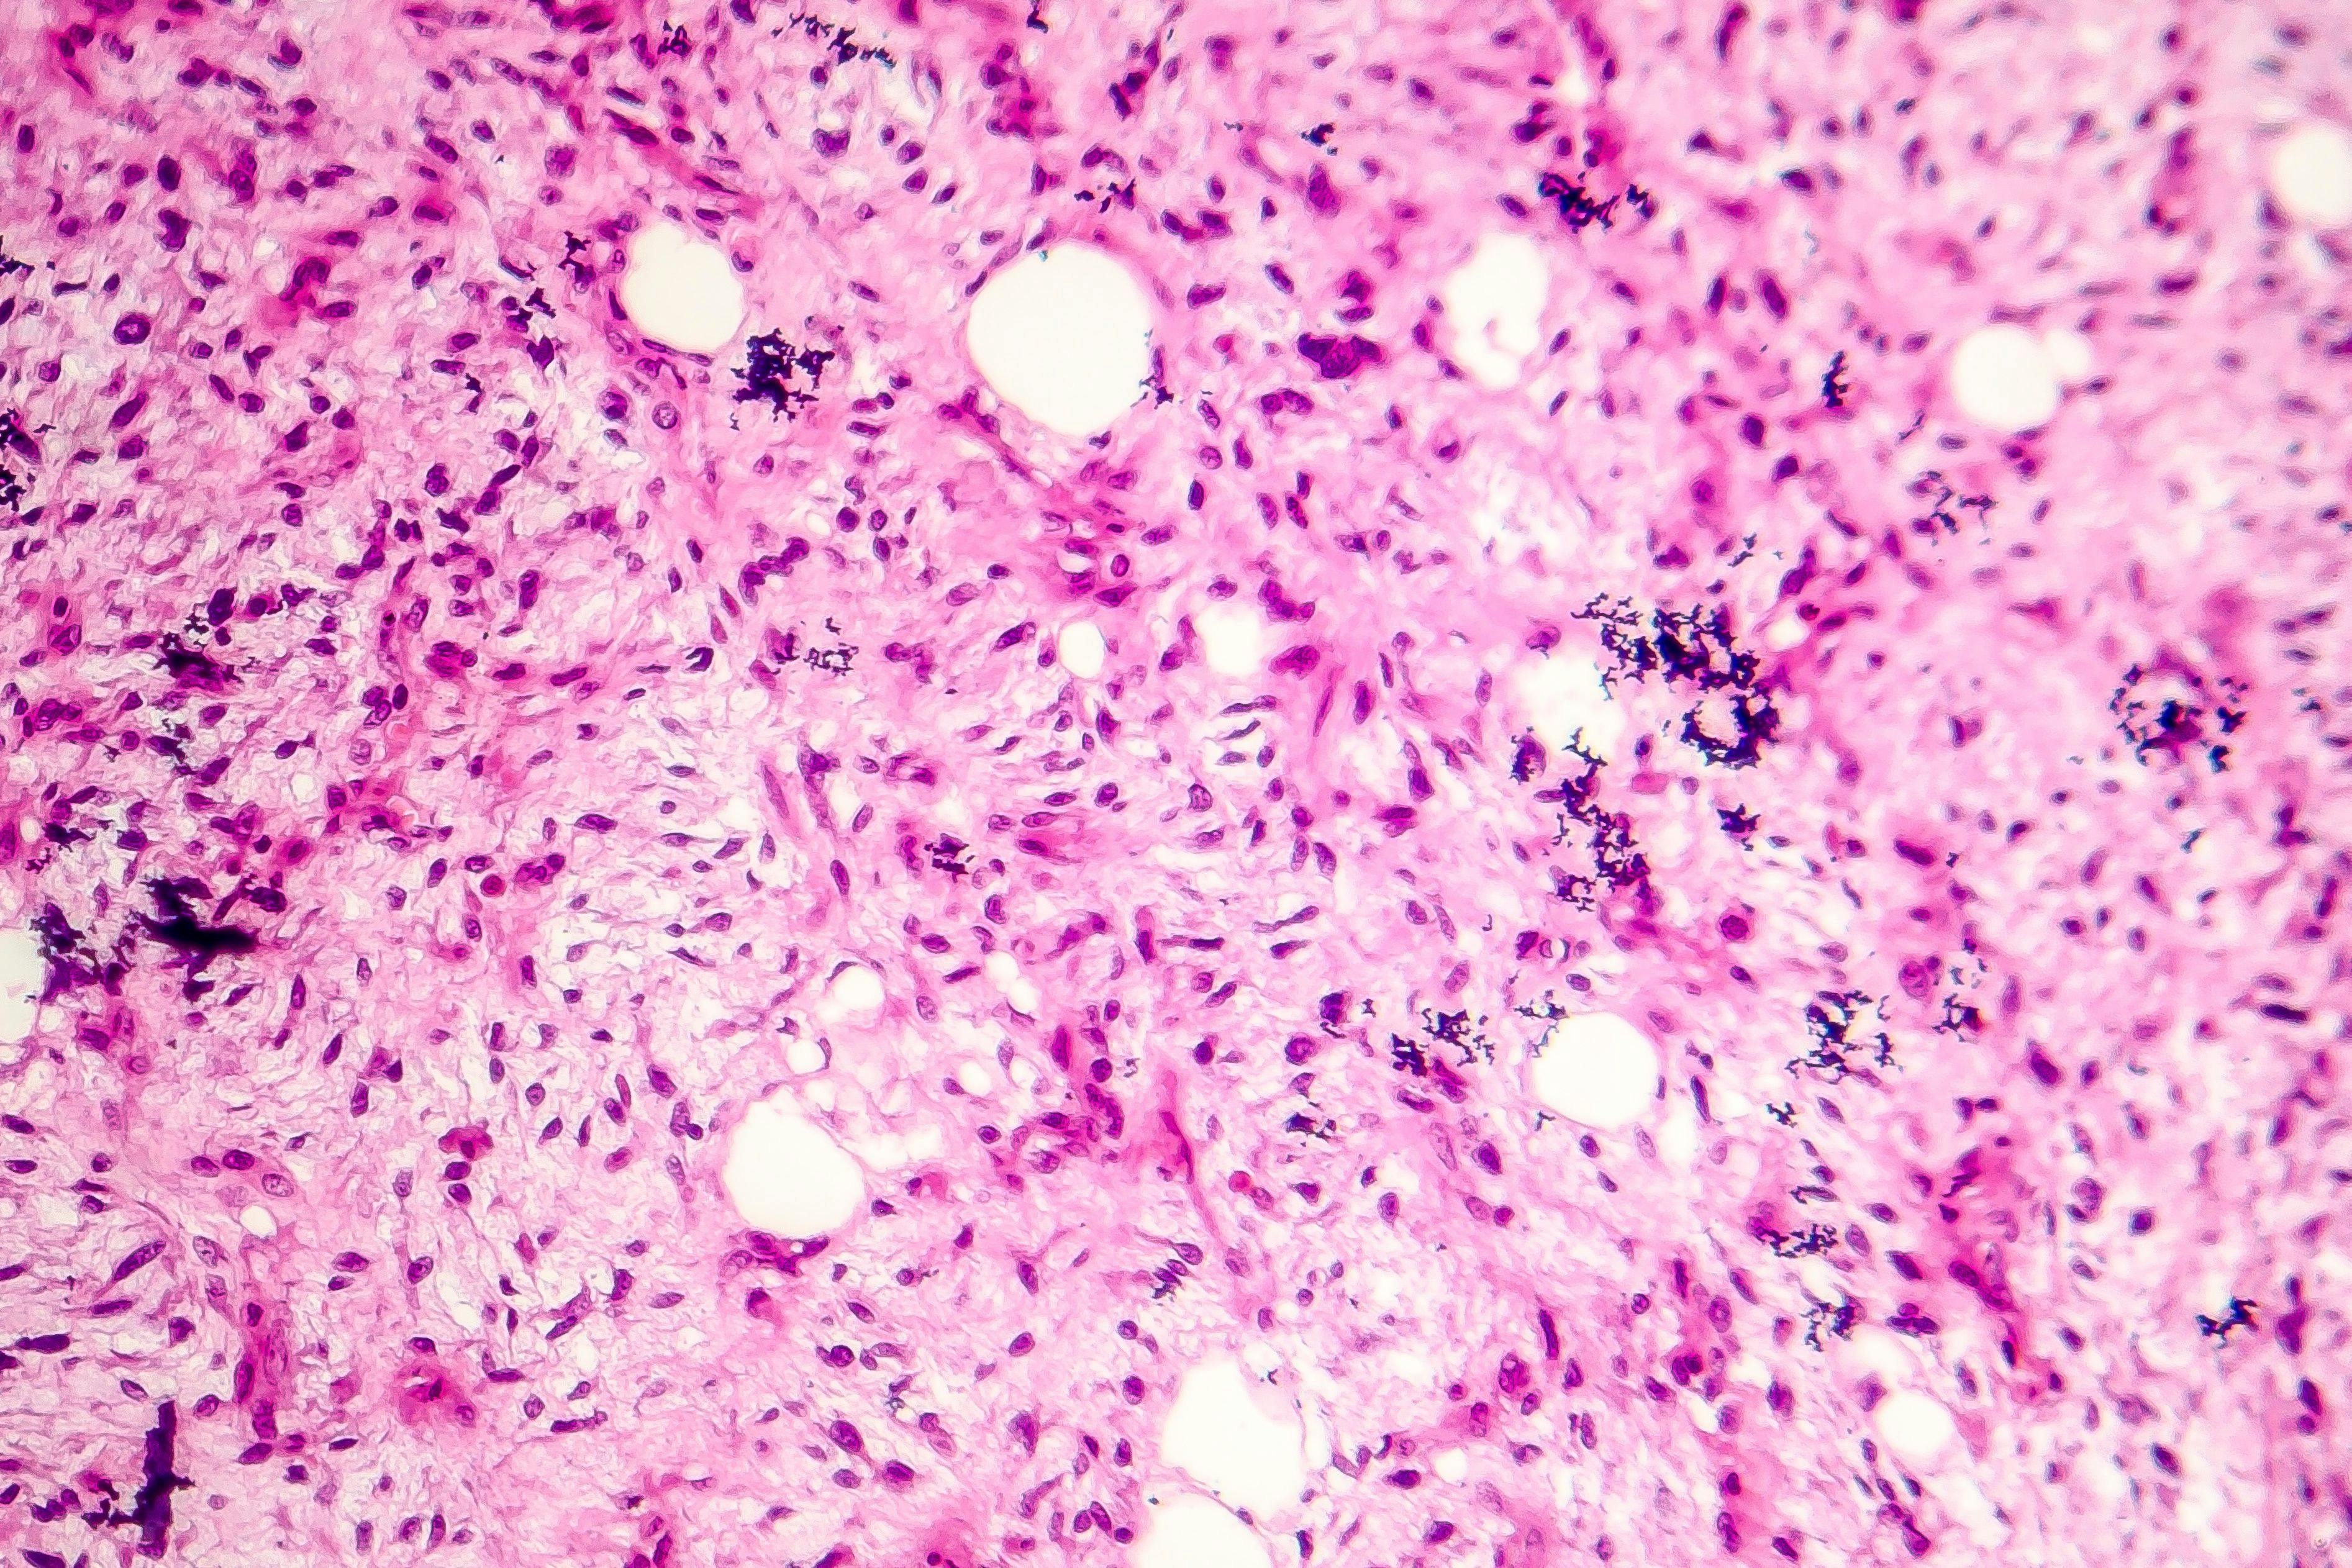 Liposarcoma, soft tissue sarcoma, light micrograph, photo under microscope | Image Credit: © Dr_Microbe - www.stock.adobe.com